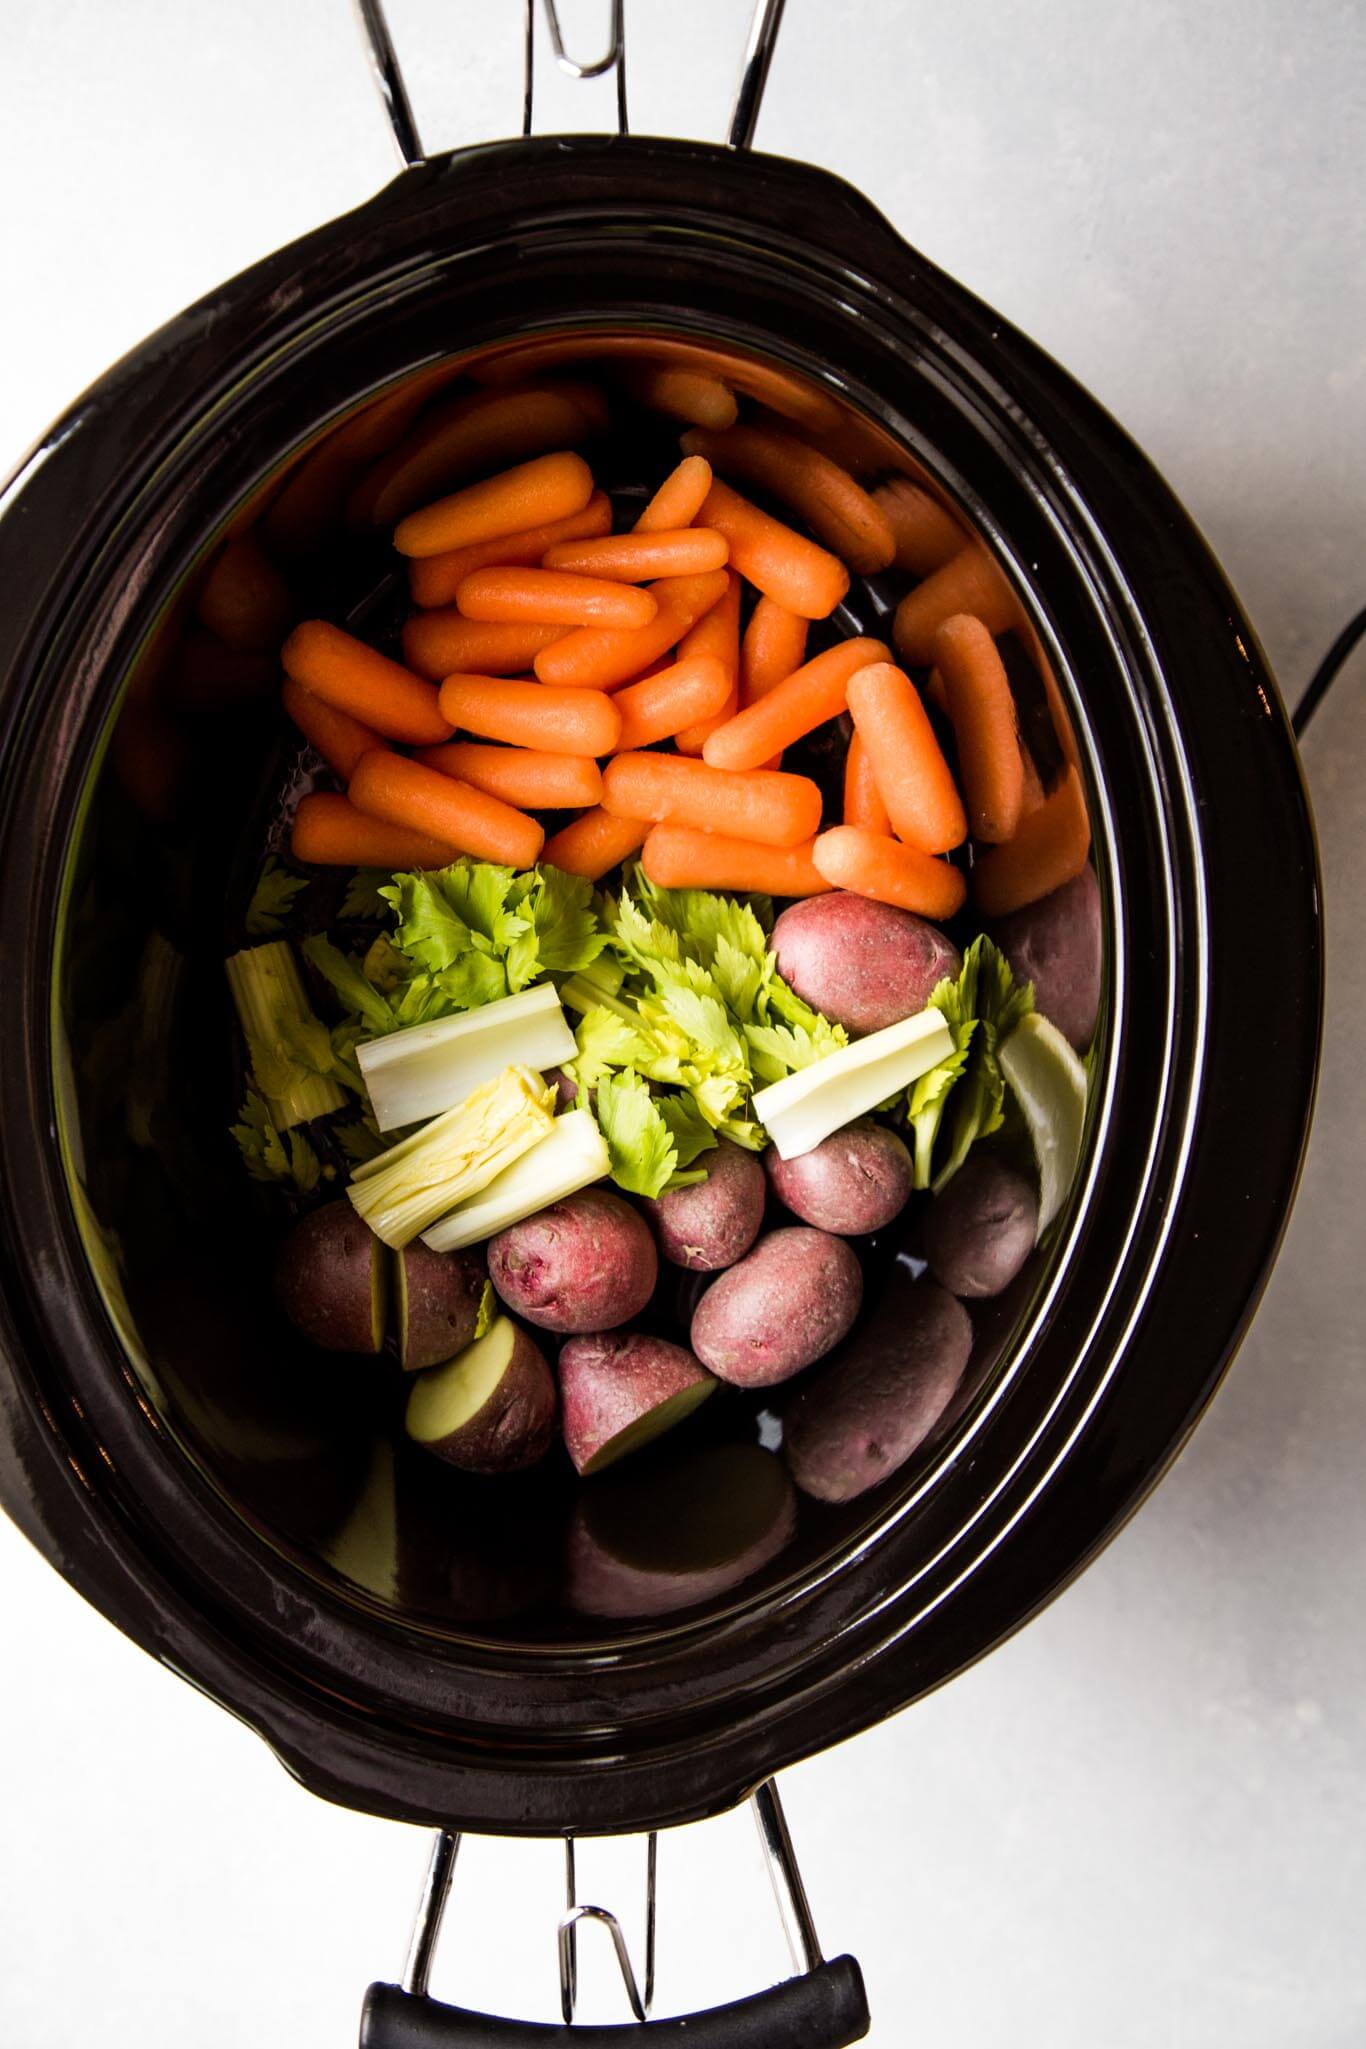 Vegetables in slow cooker